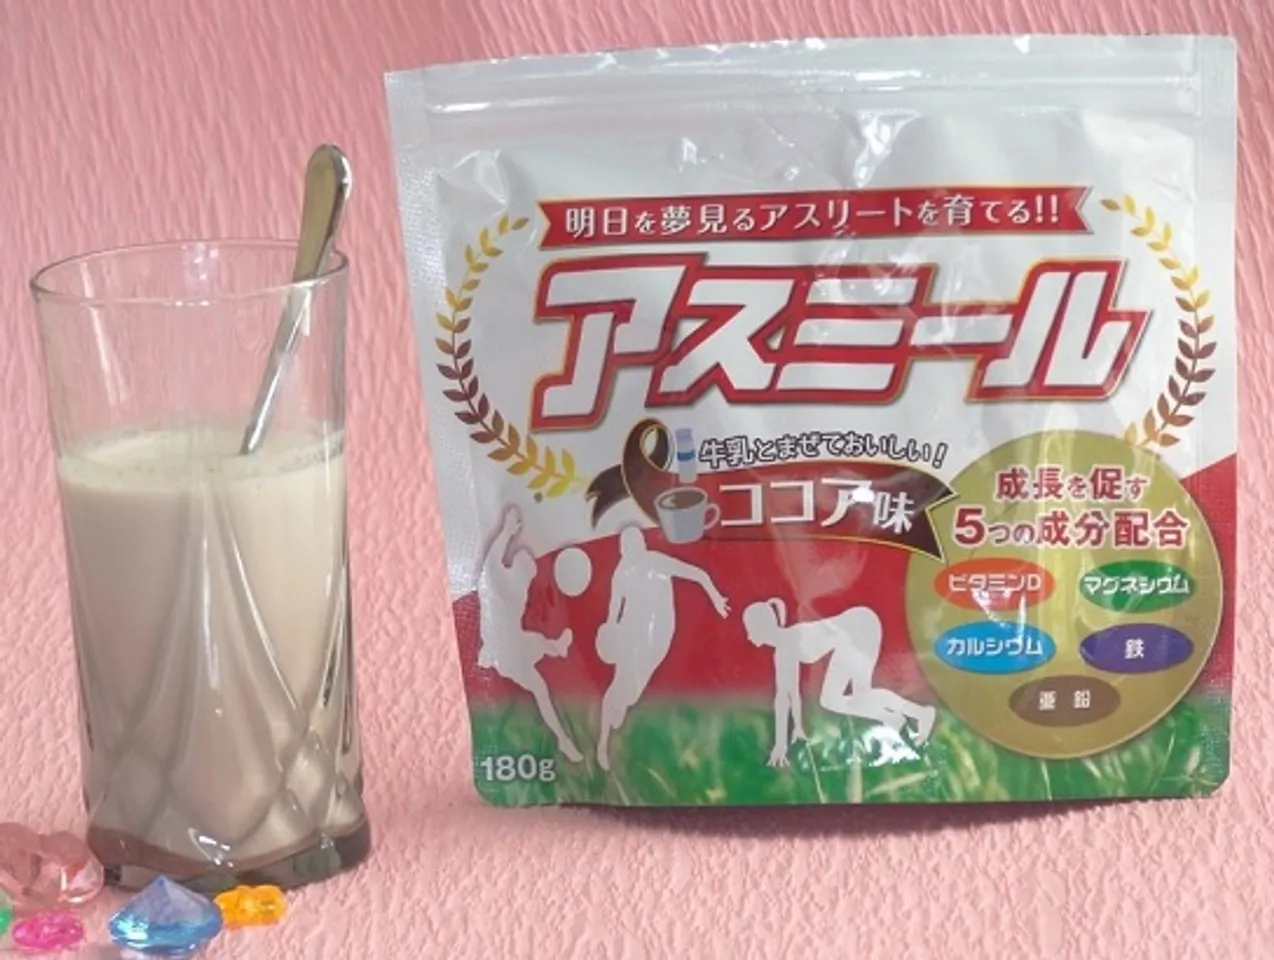 Công dụng sữa Asumiru Ichiban Boshi 